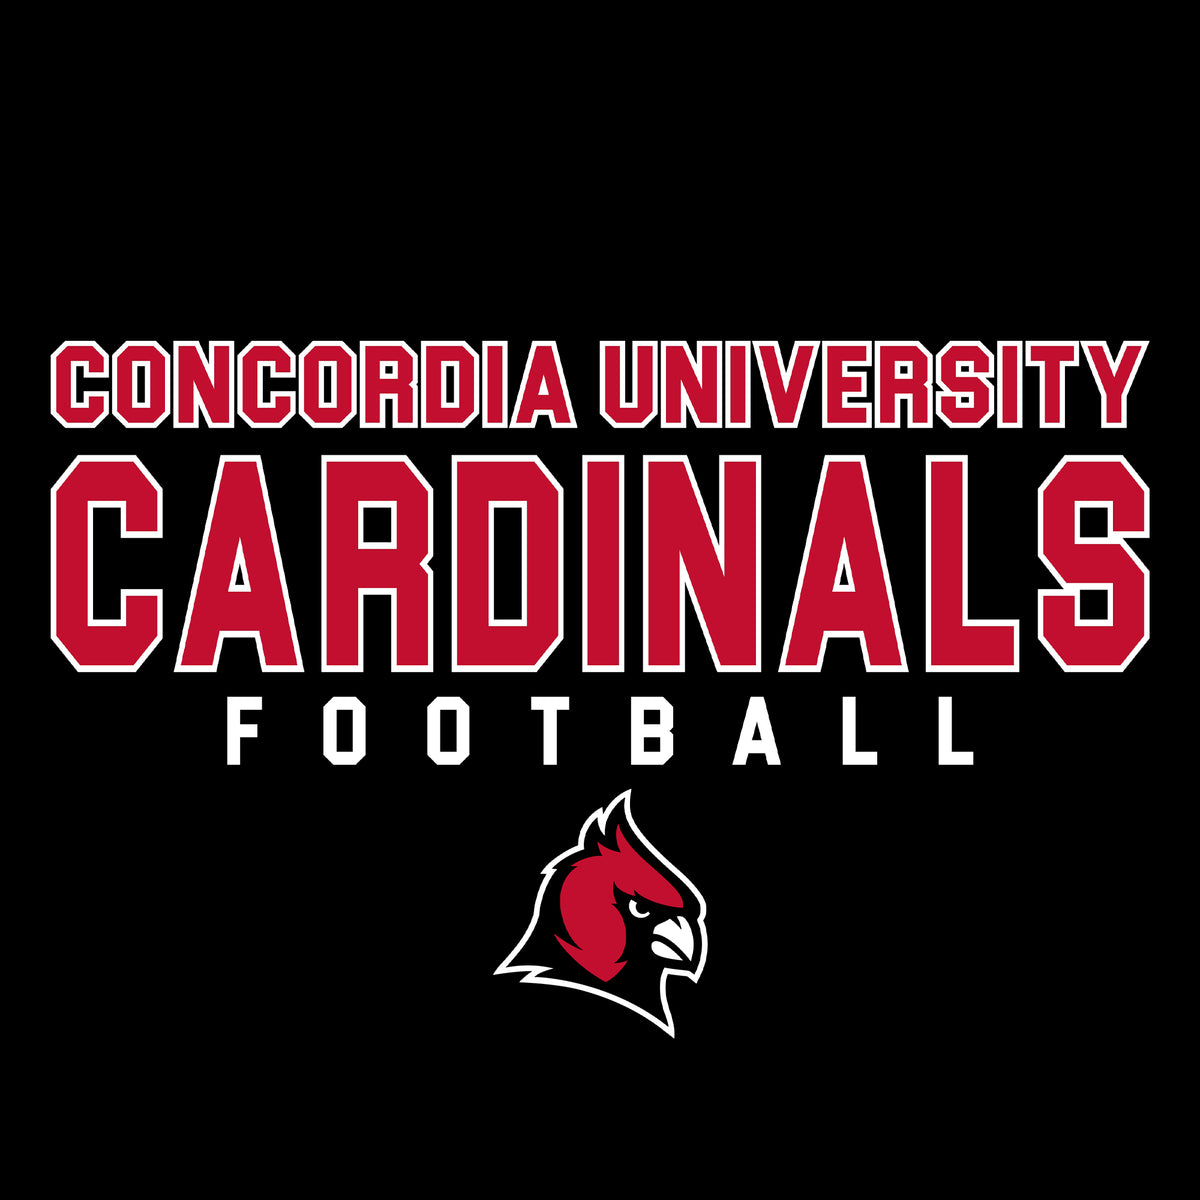 Concordia Cardinal Closet Go Cardinals T-Shirt- Black